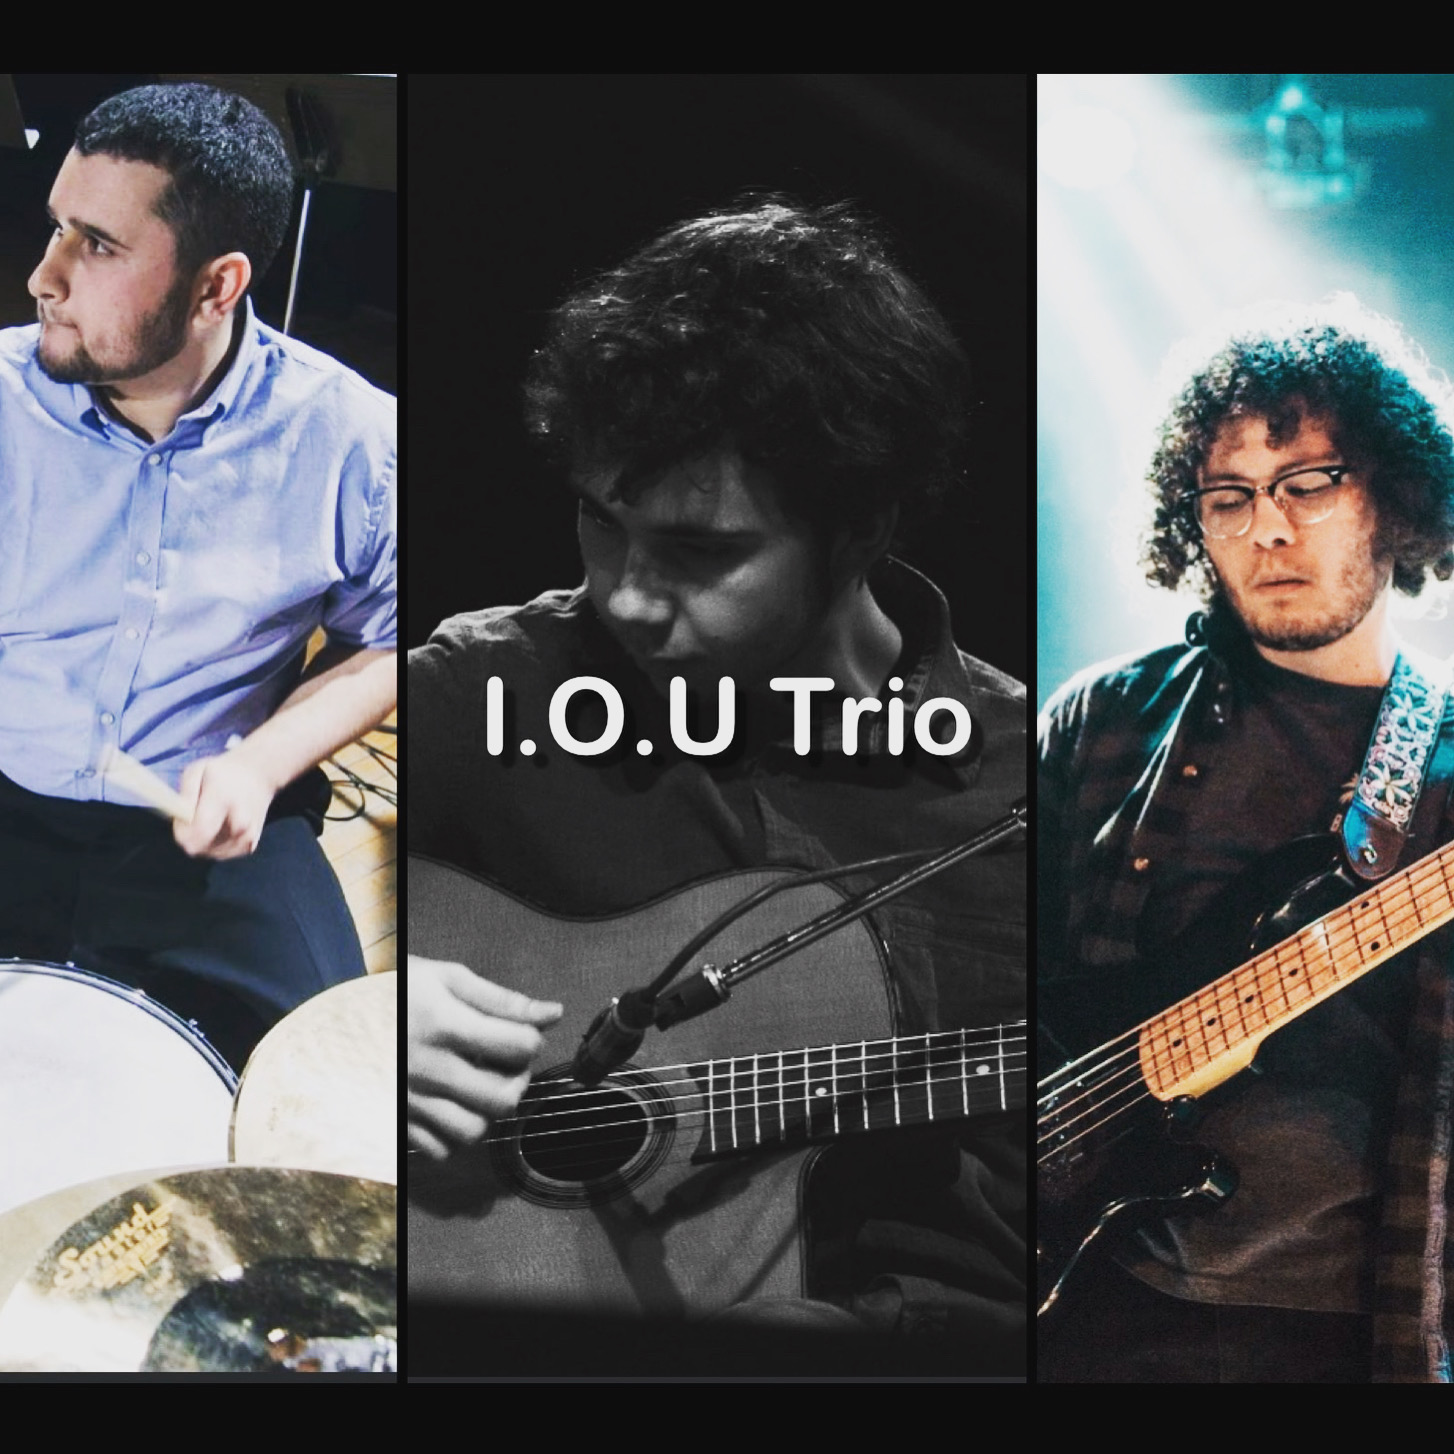 I.O.U Trio (Humber College)